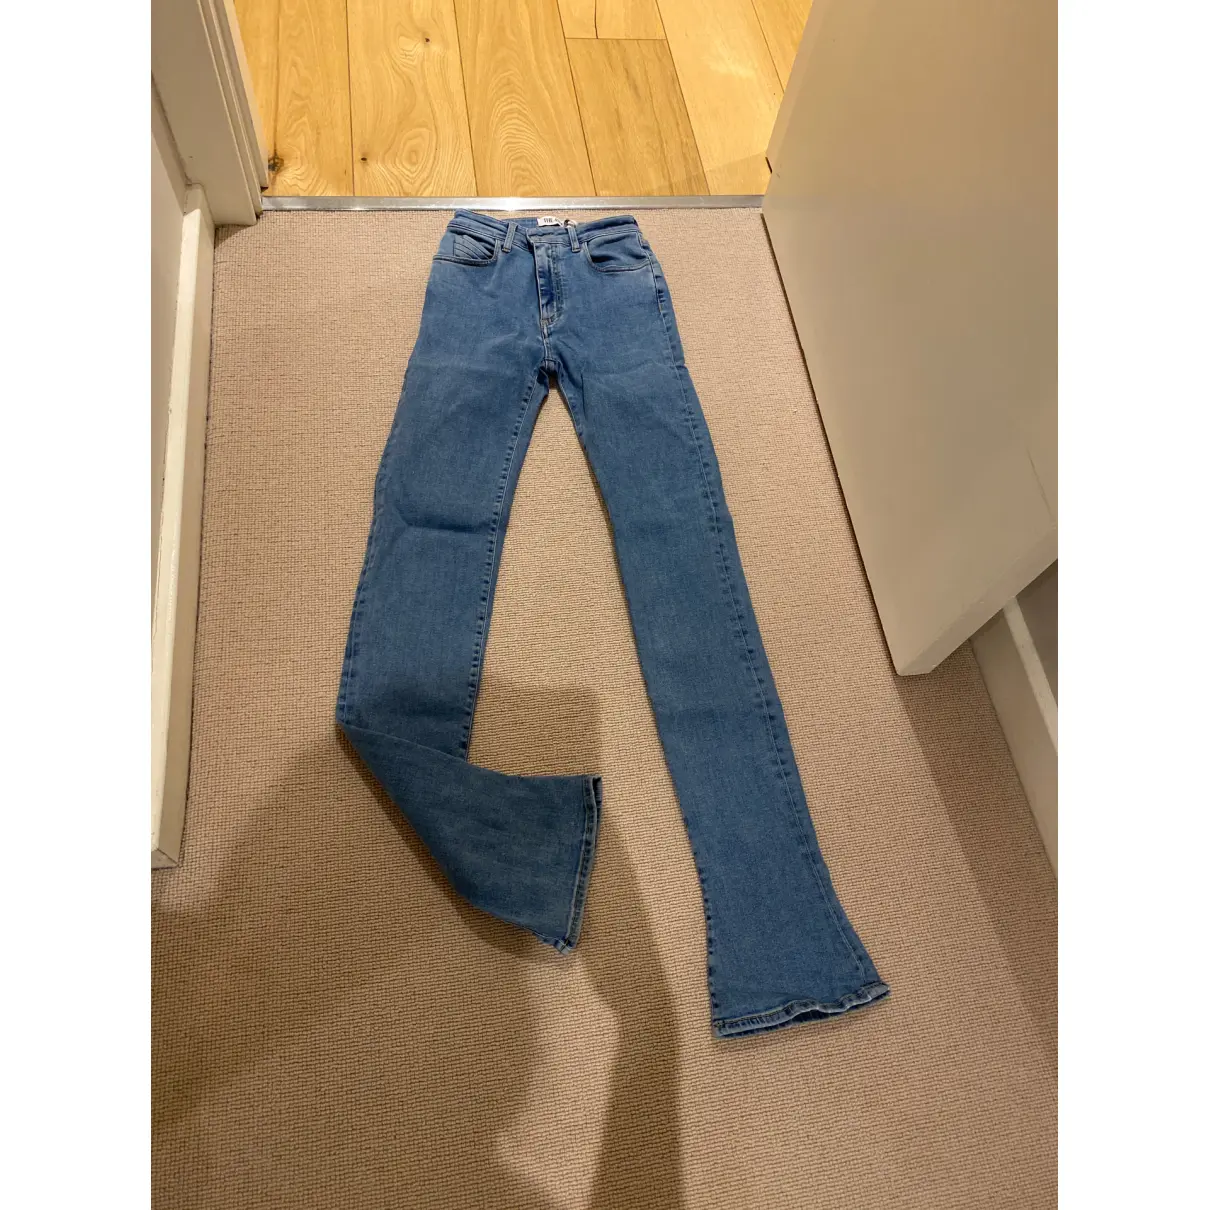 Buy Attico Straight jeans online